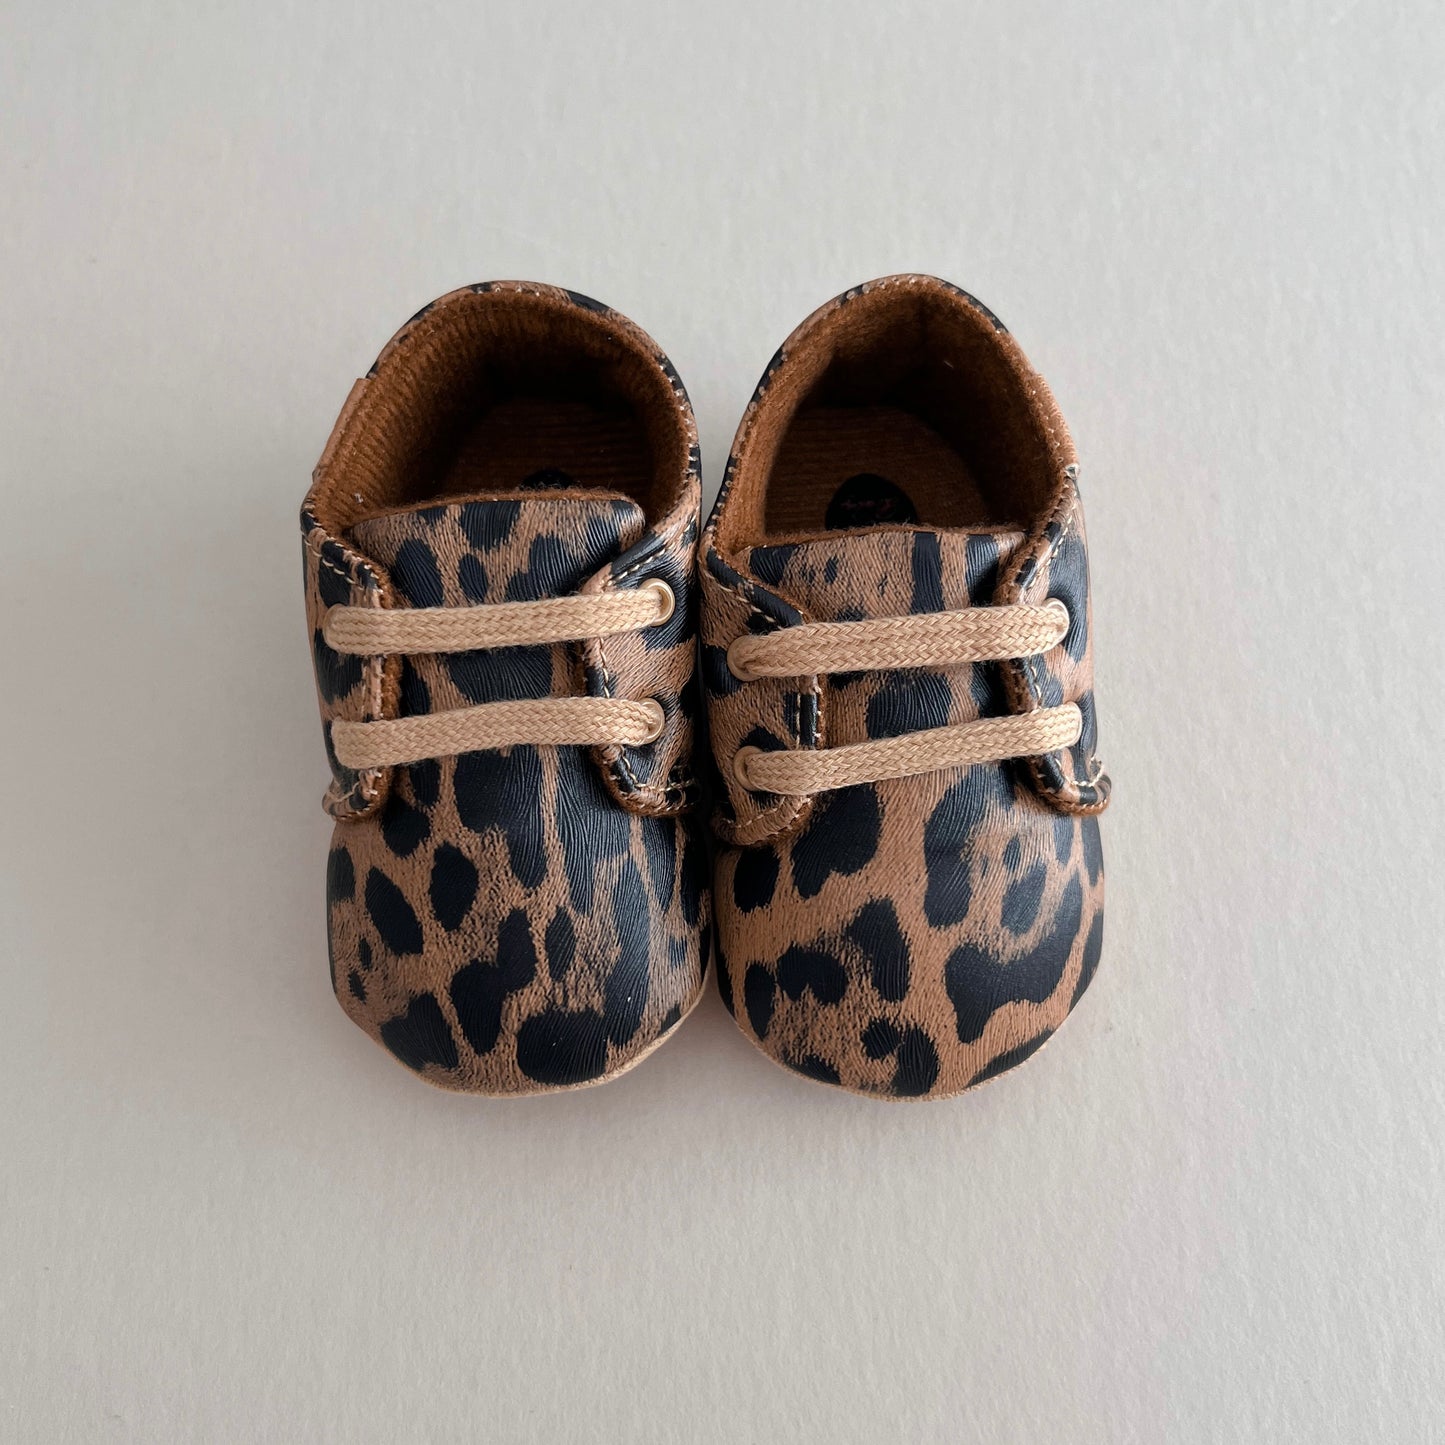 Leopard Oxford Shoes